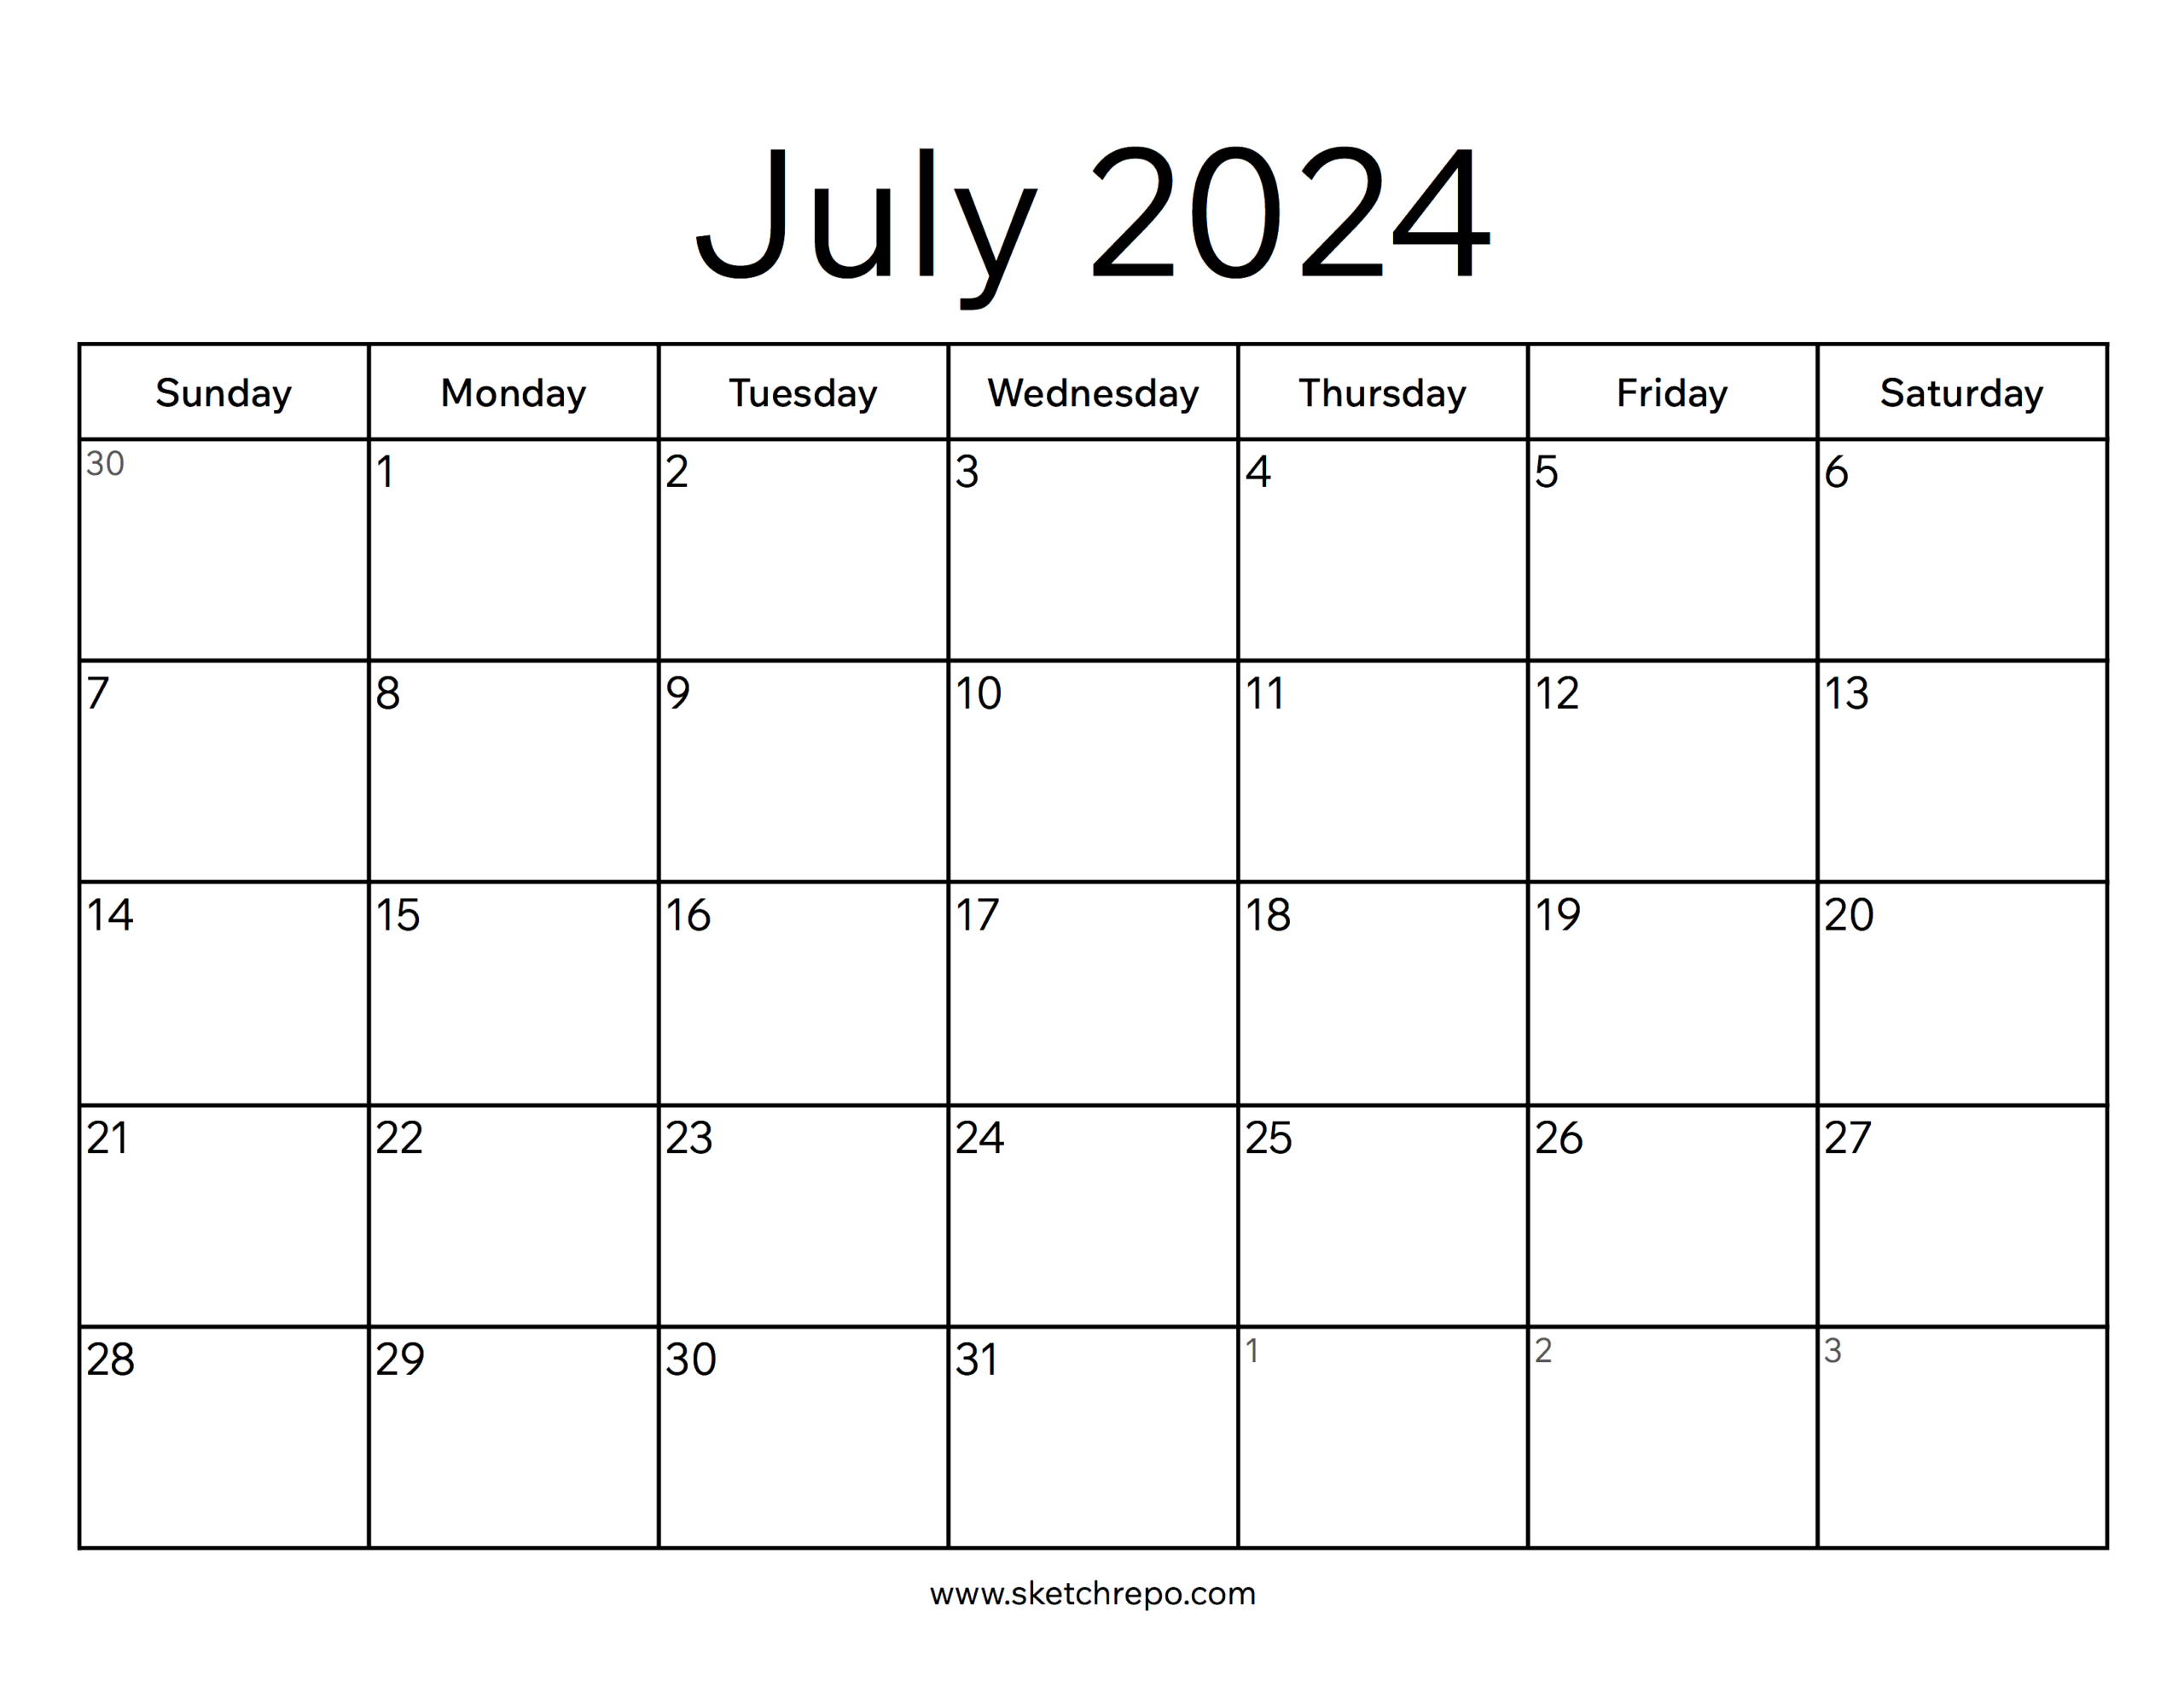 July 2024 Calendar – Sketch Repo for A Calendar of July 2024